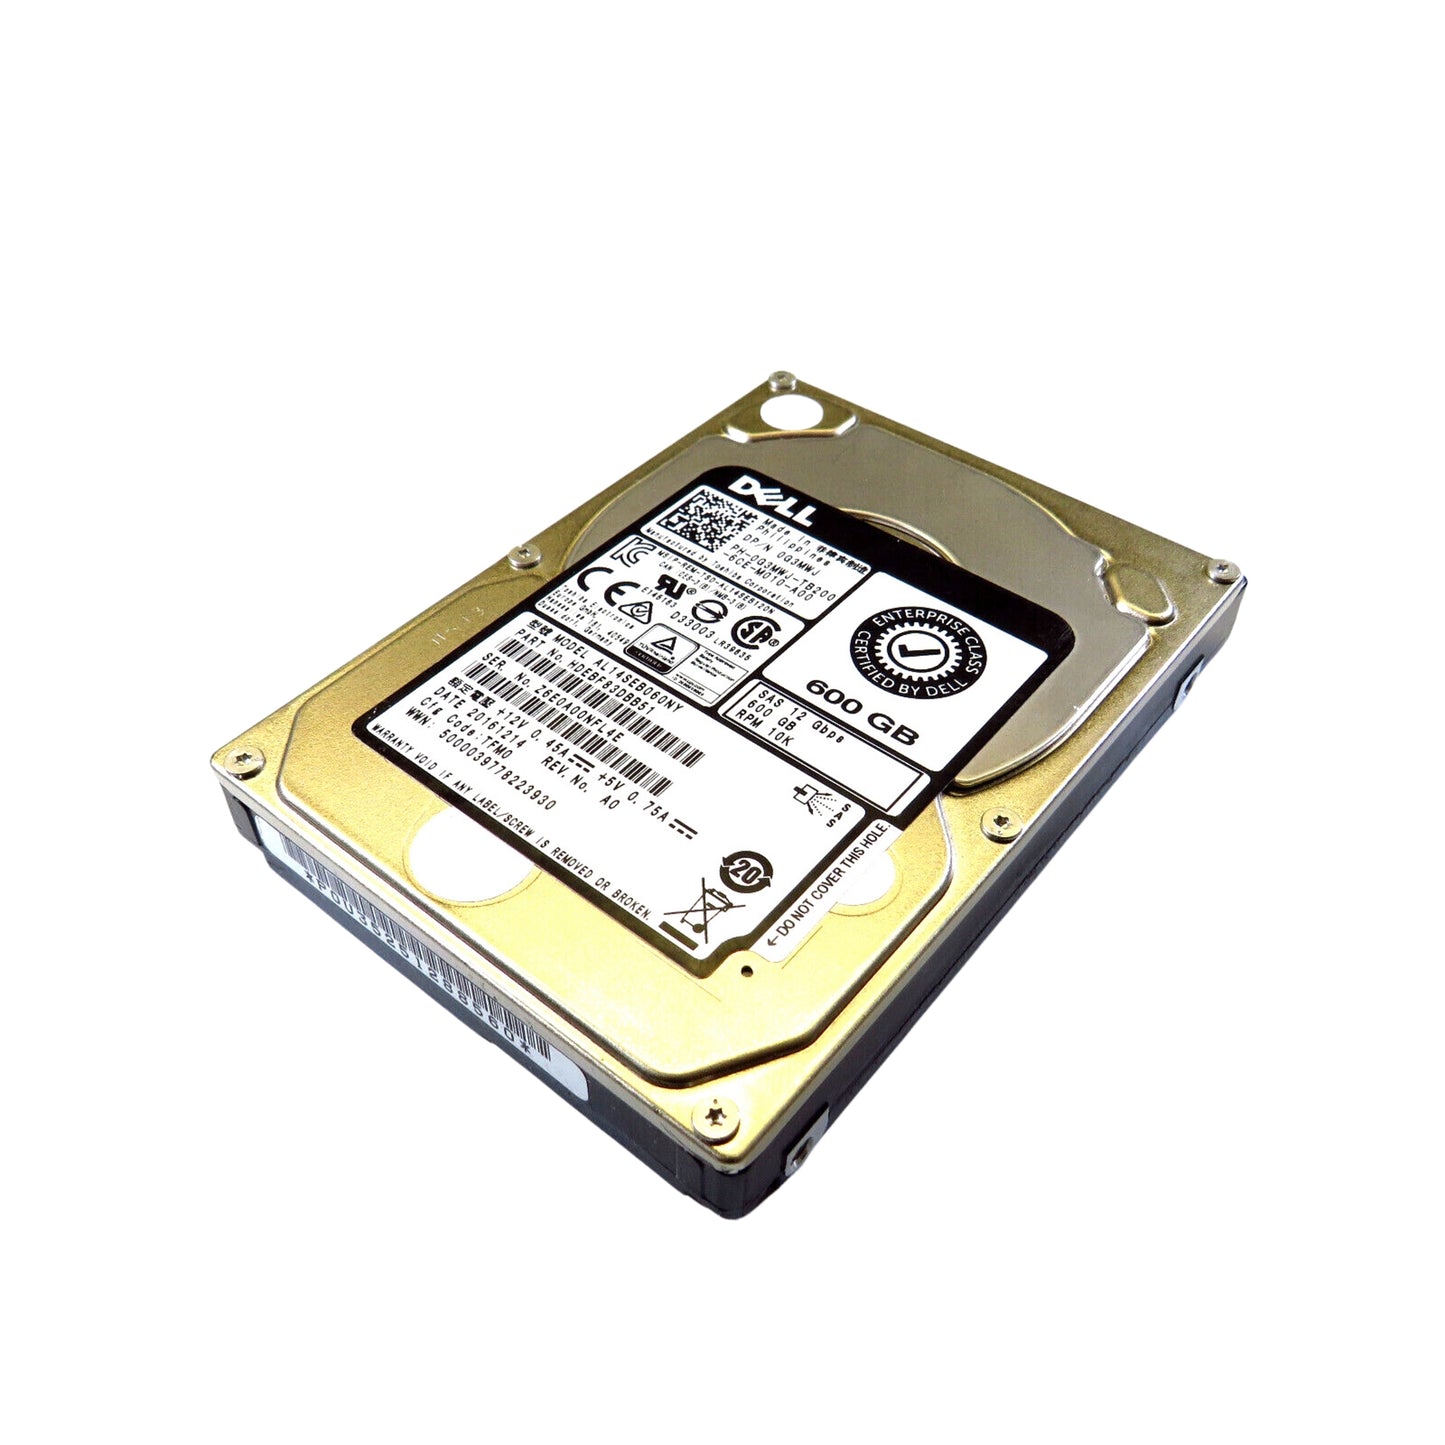 Dell G3MWJ 2.5" 600GB 10000RPM SAS 12Gb/s Hard Disk Drive (HDD), Silver (Refurbished)